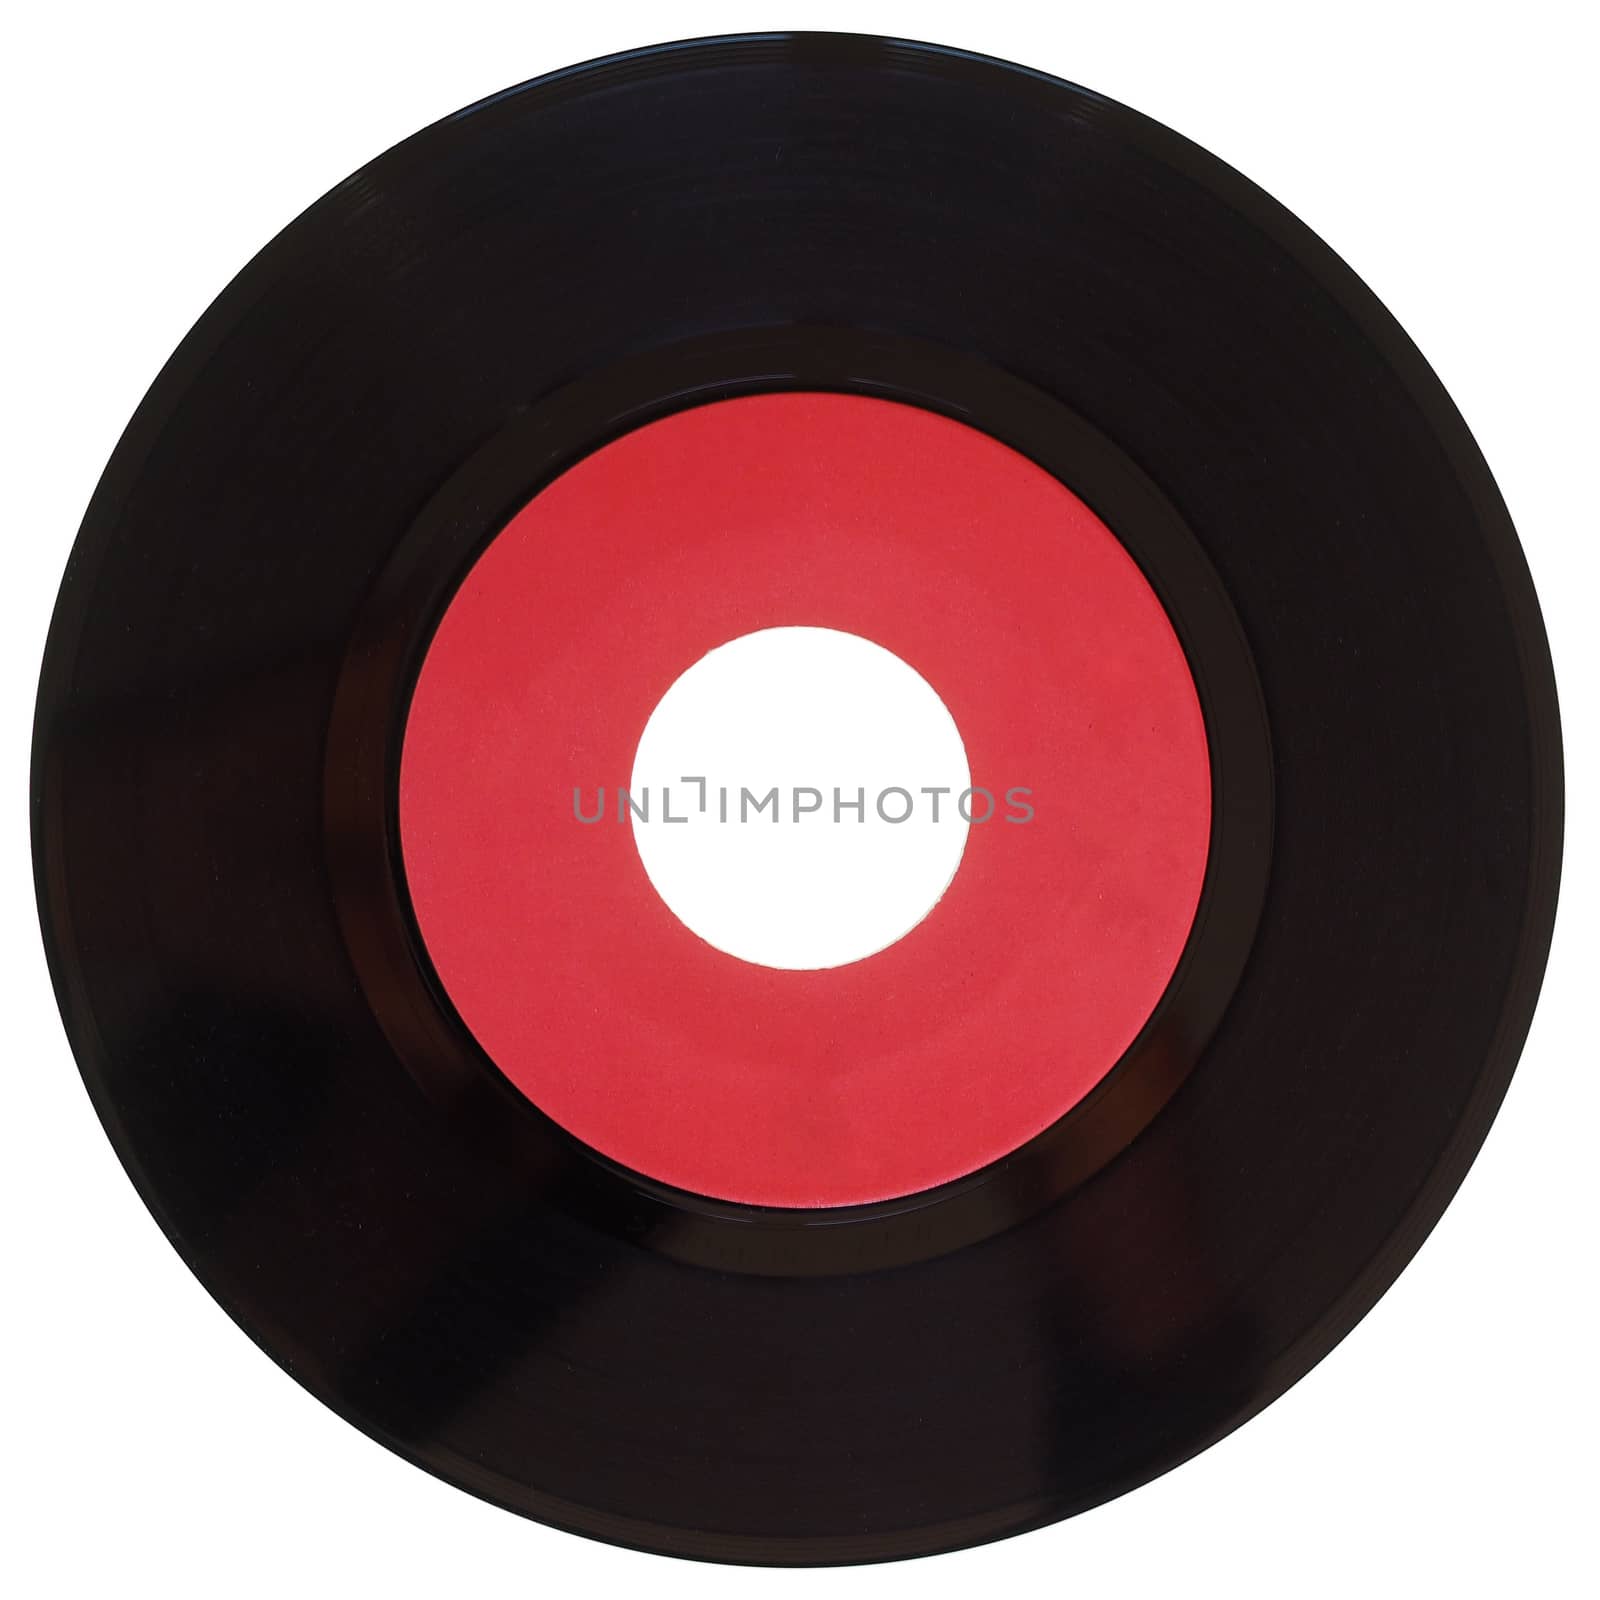 Vinyl record isolated by claudiodivizia